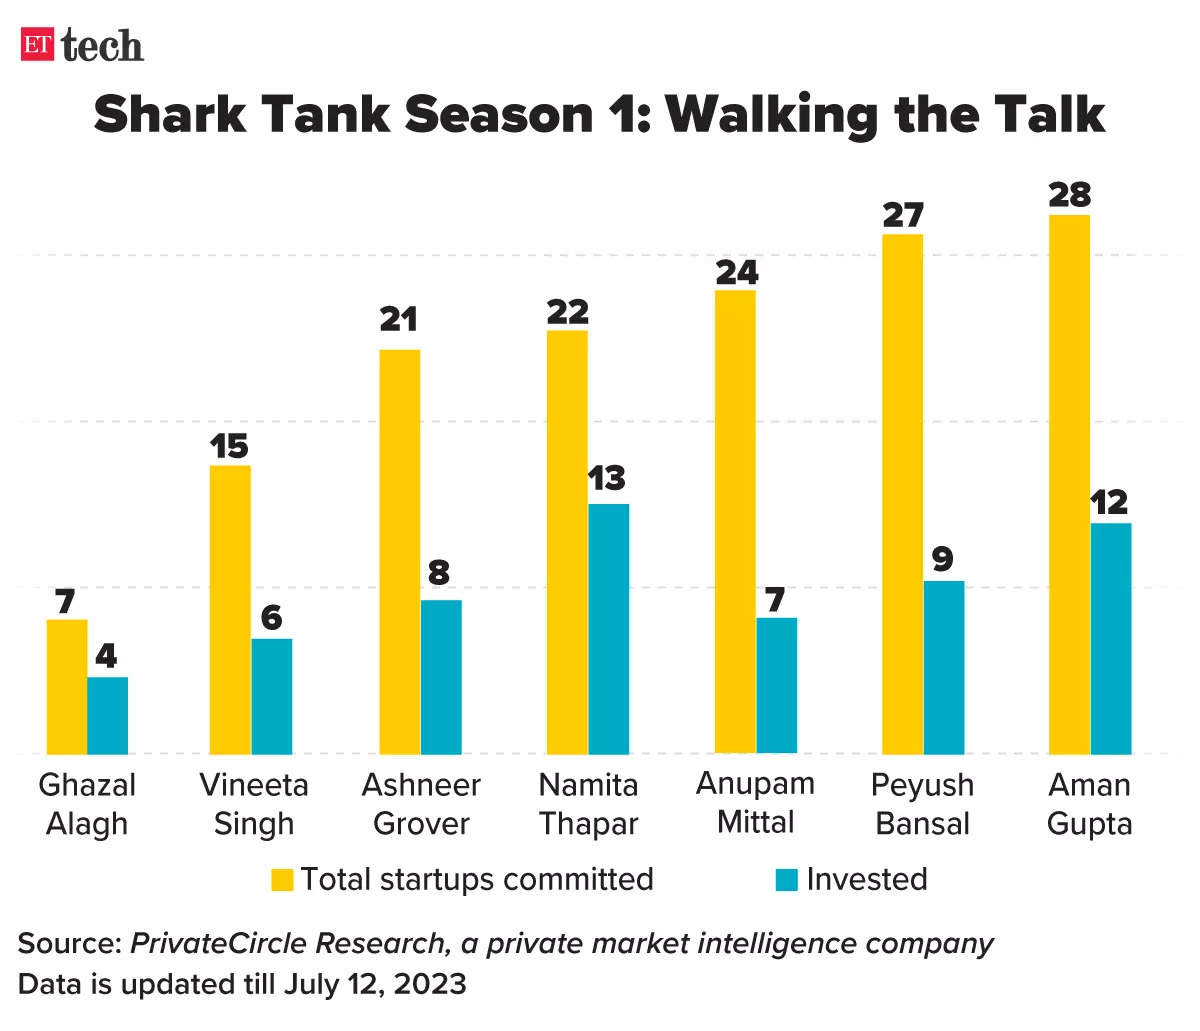 Shark Tank India 1 showed